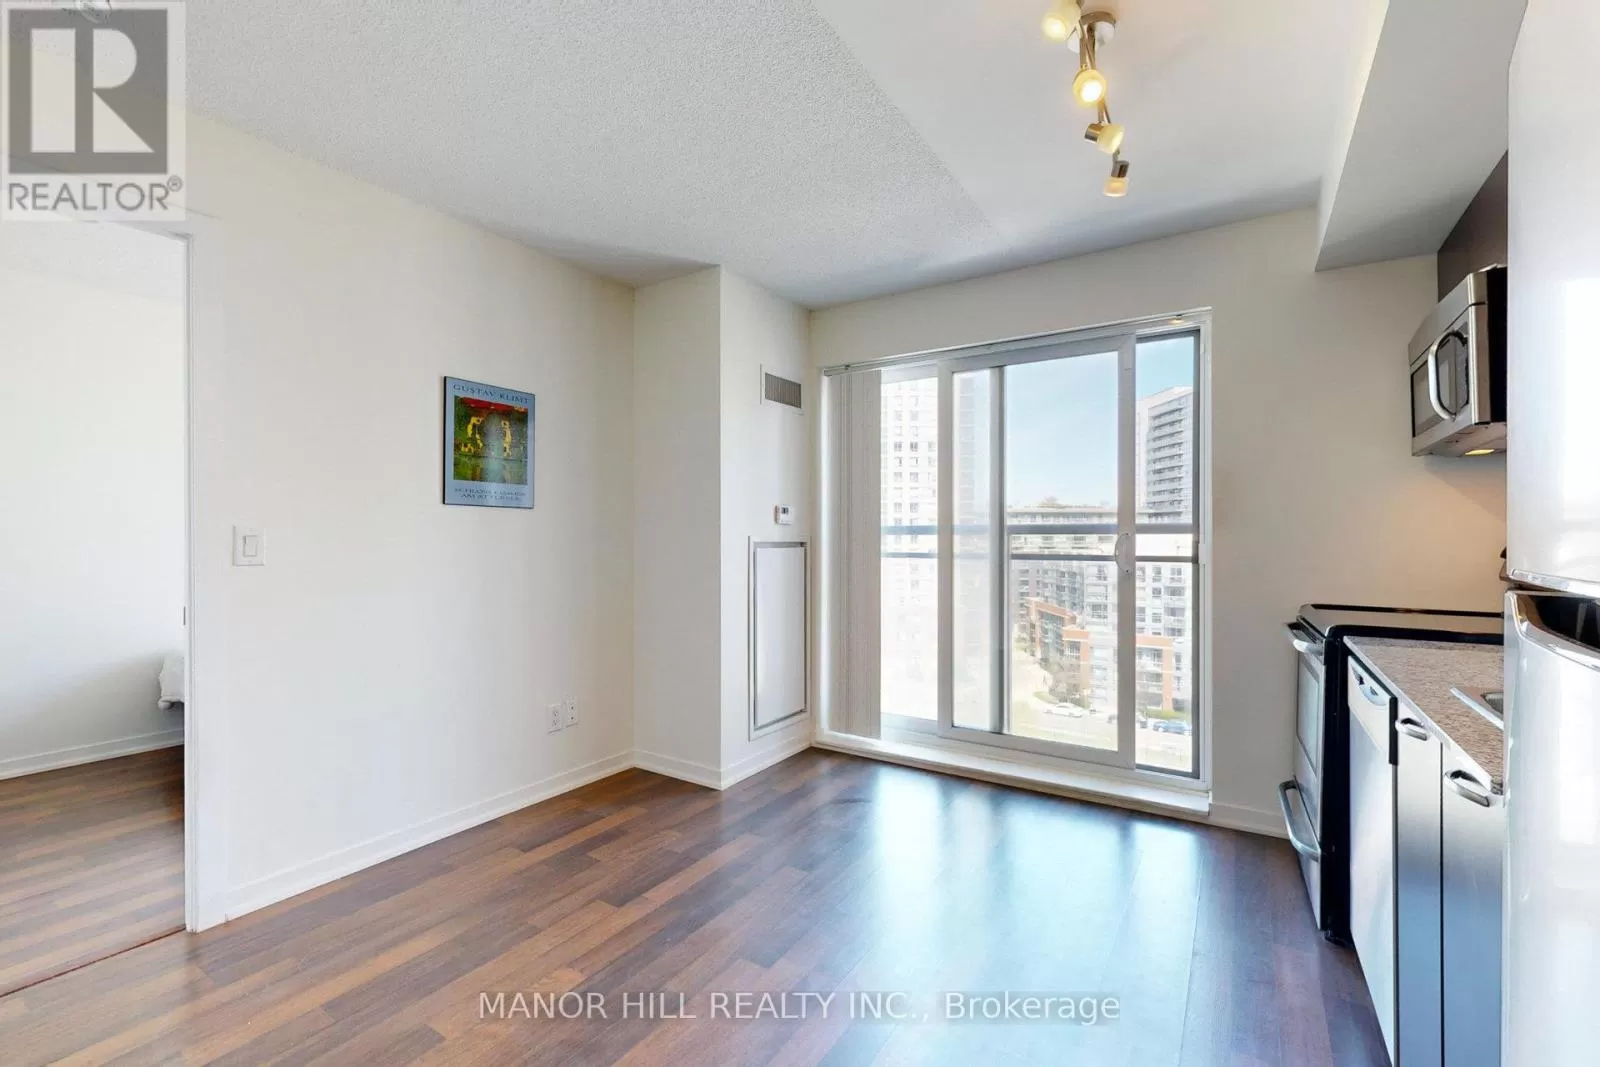 Apartment for rent: 919 - 38 Joe Shuster Way, Toronto, Ontario M6K 0A5